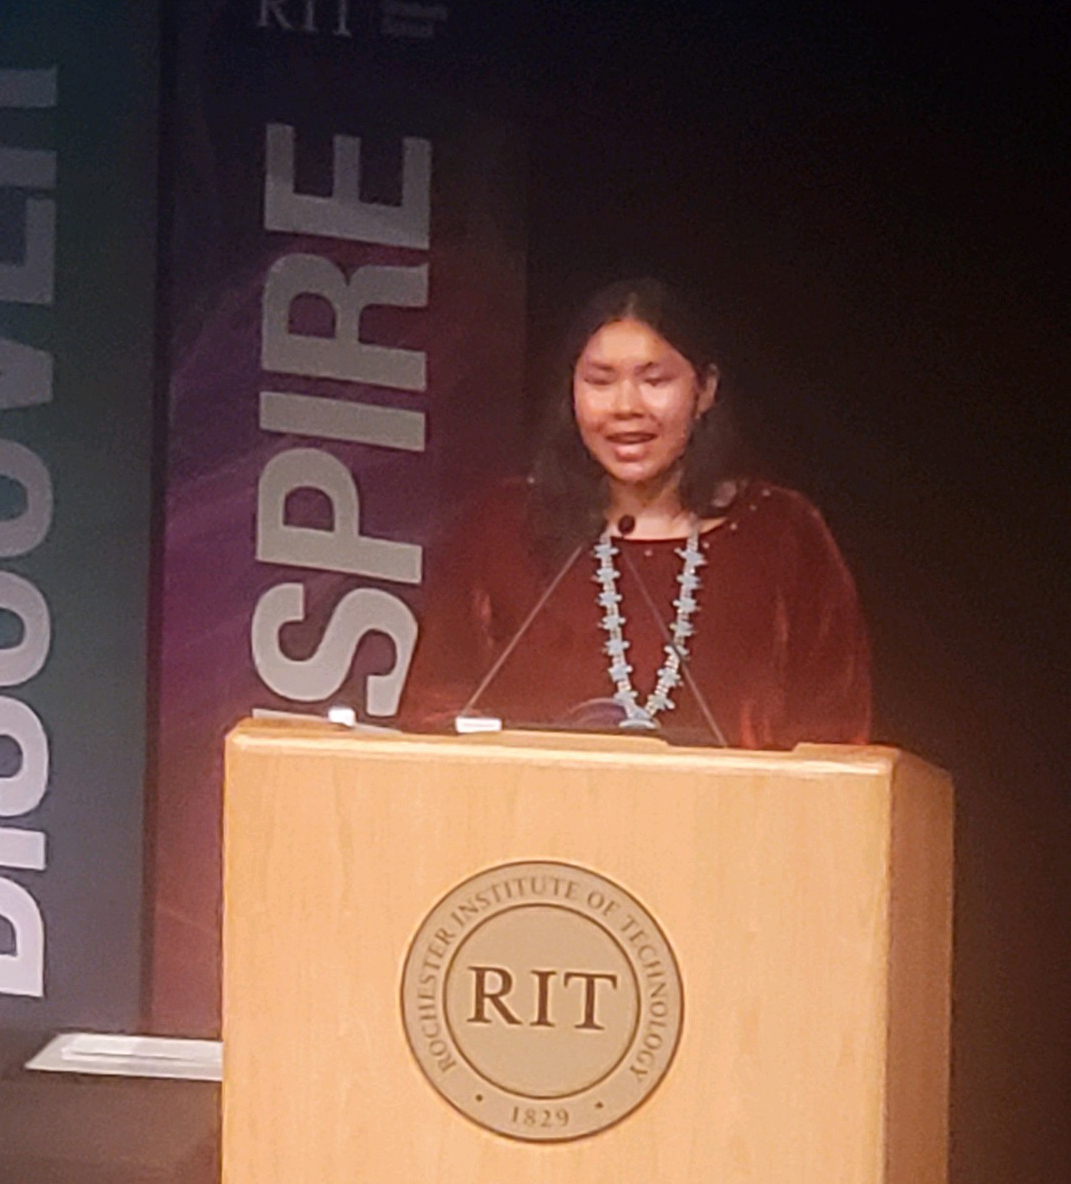 photo of student at podium